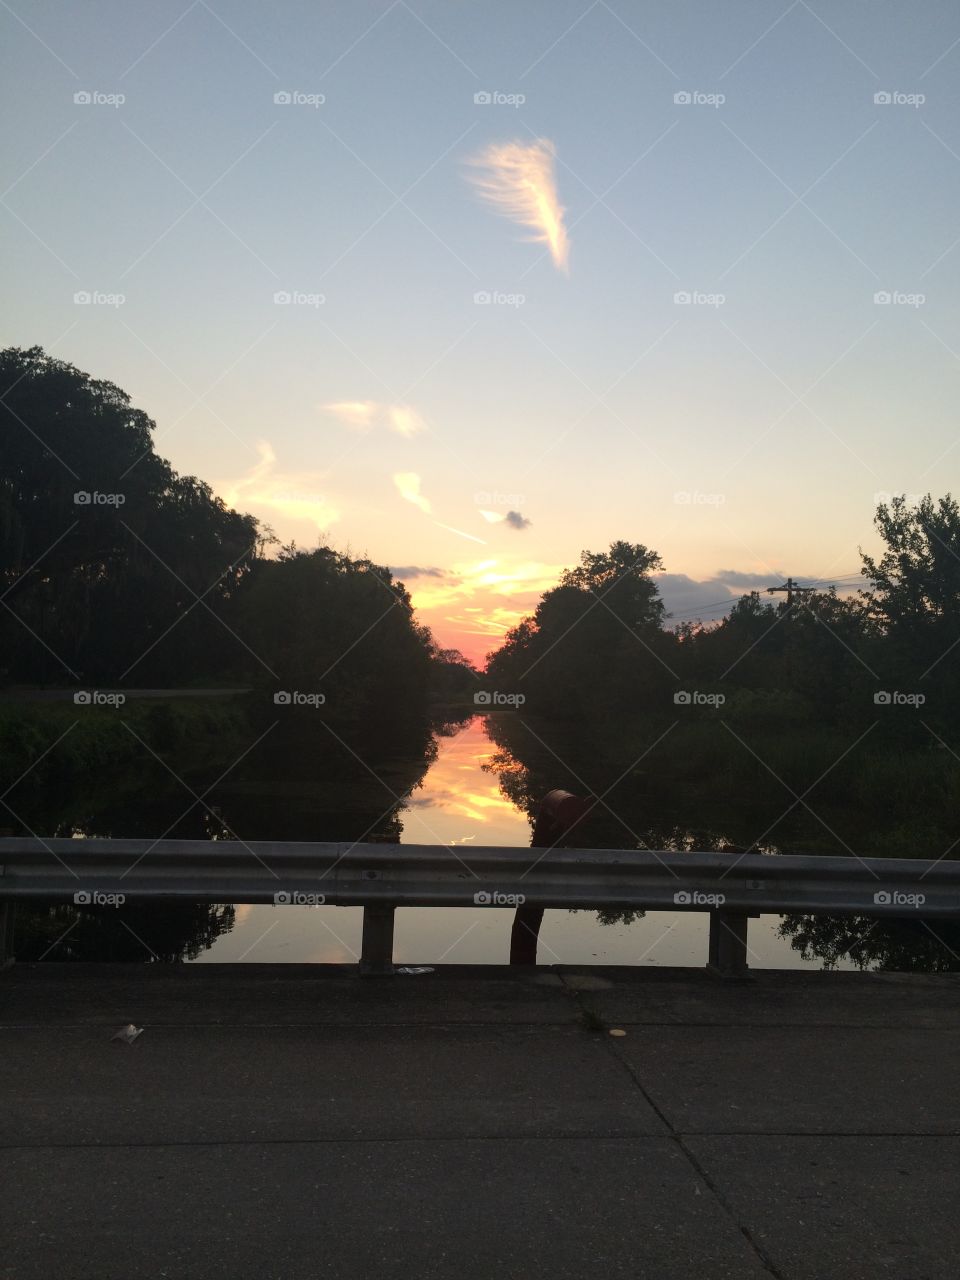 Sunset on the bayou from bridge